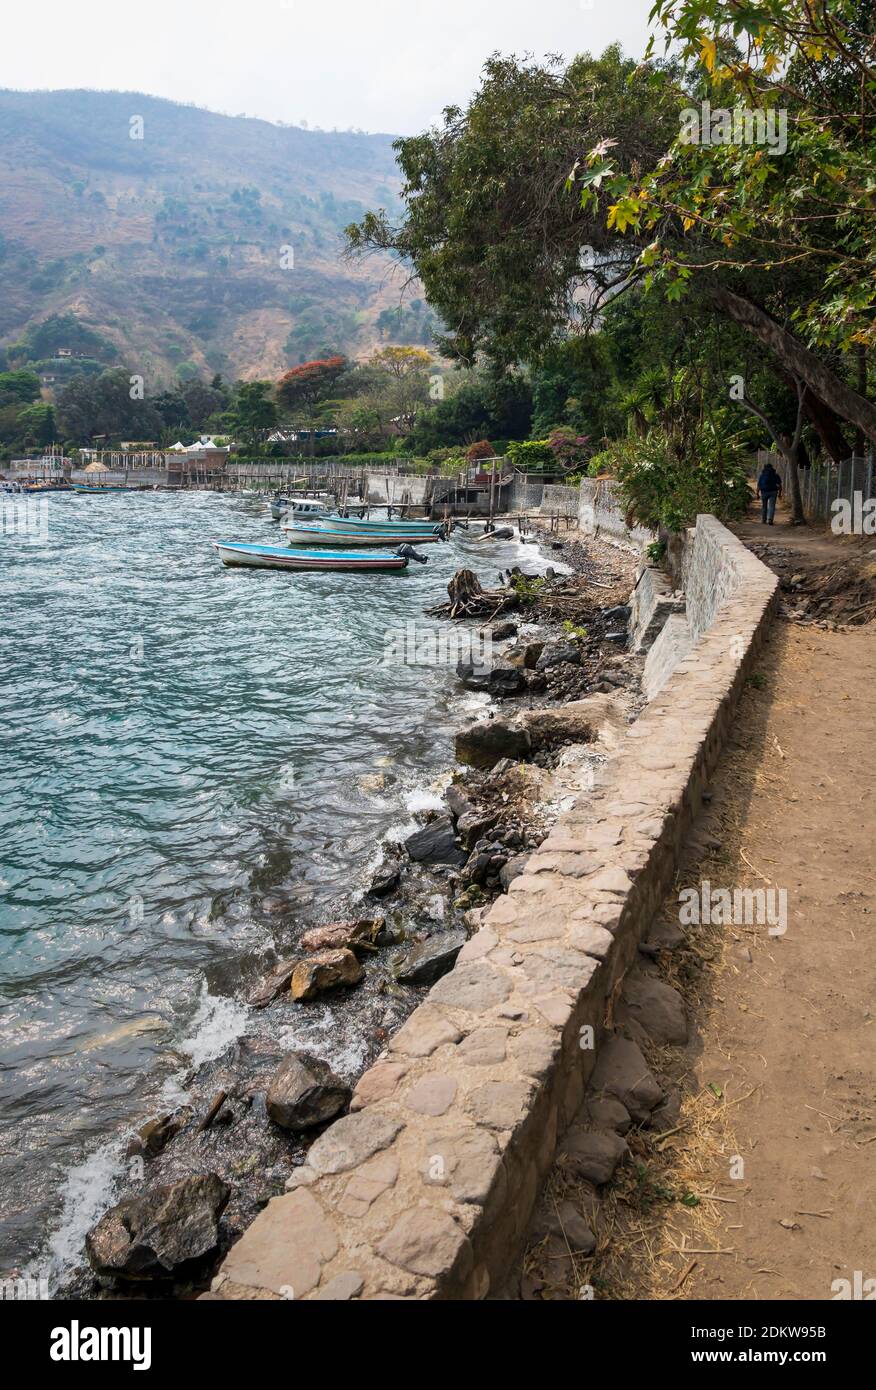 Pathway and wooden docks along lake Atitlan at the coast of Santa Cruz la Laguna, Guatemala Stock Photo